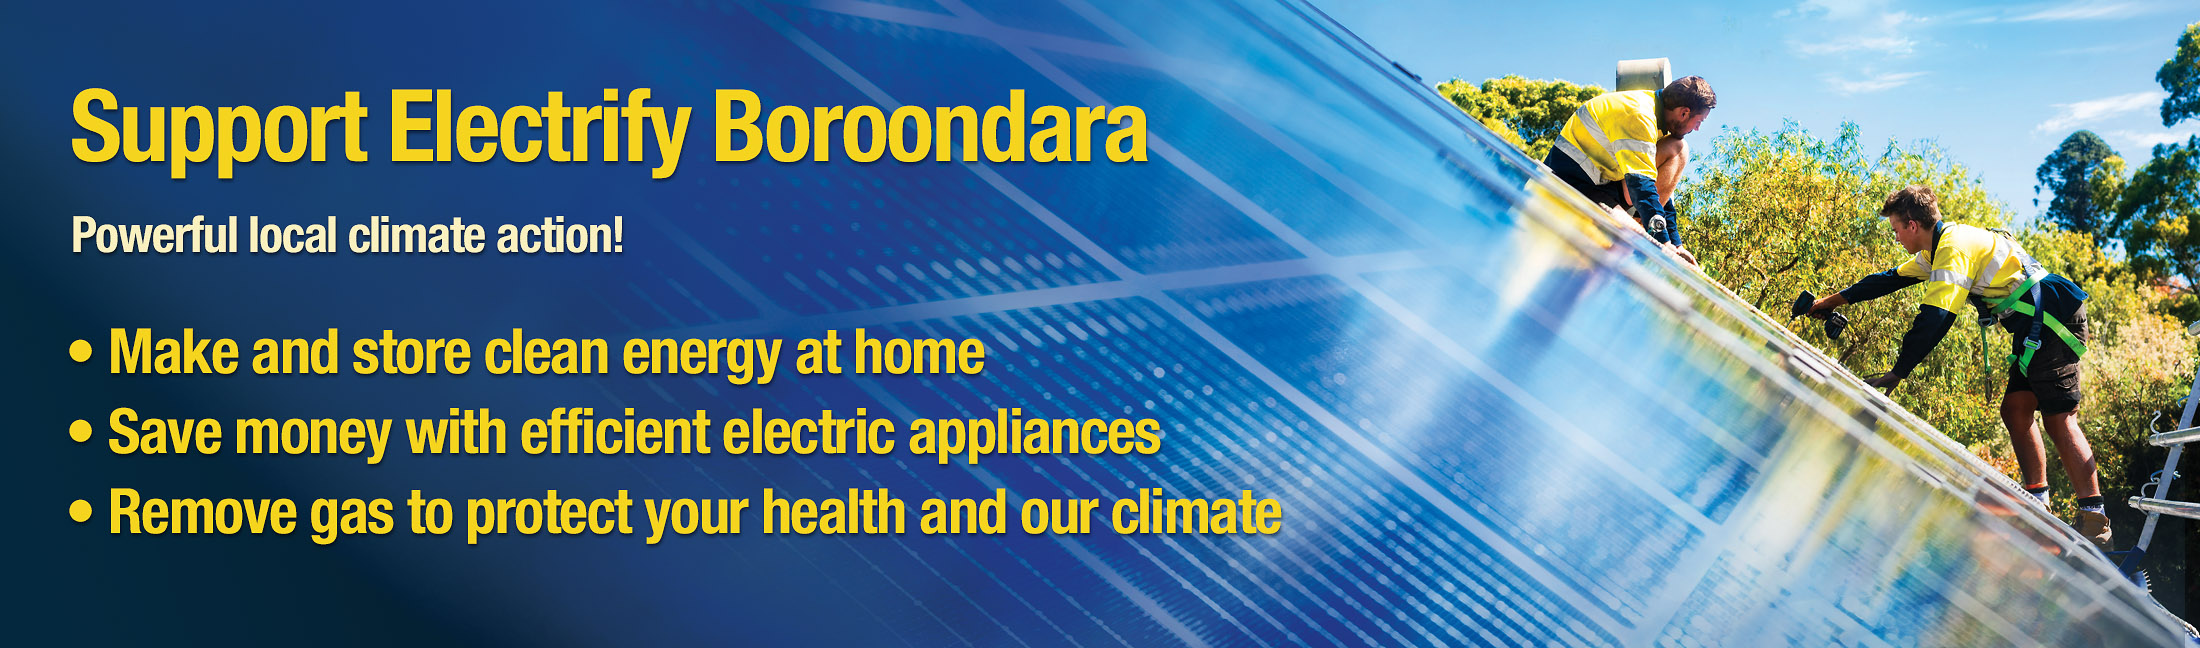 Support Electrify Boroondara initiative